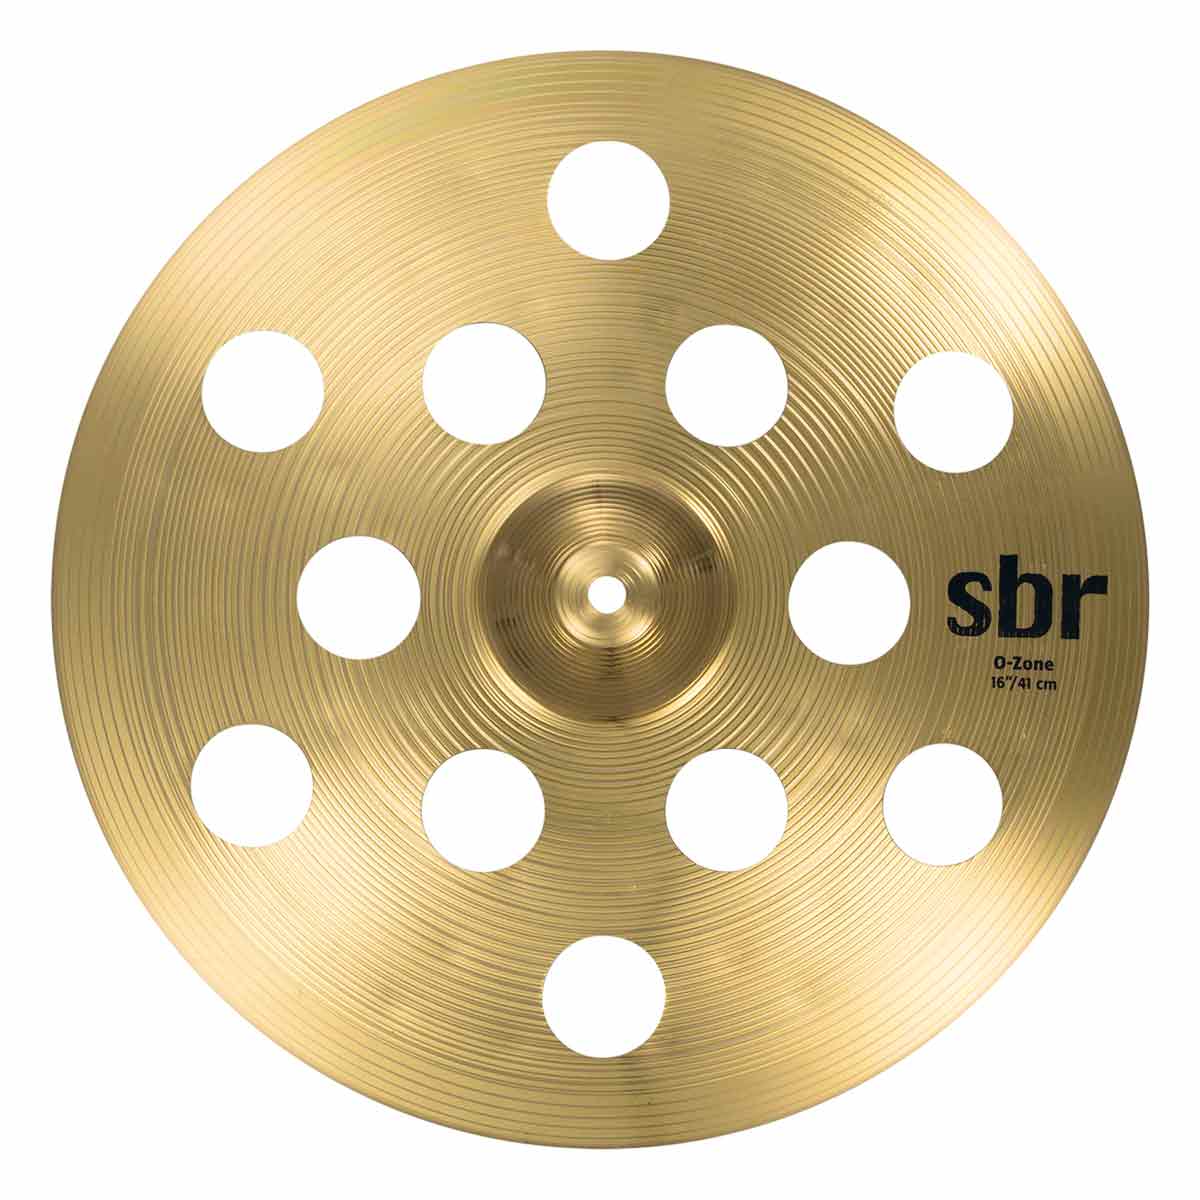 Sabian 16" SBR O-Zone Effects Crash Cymbal SBR1600-Andy's Music